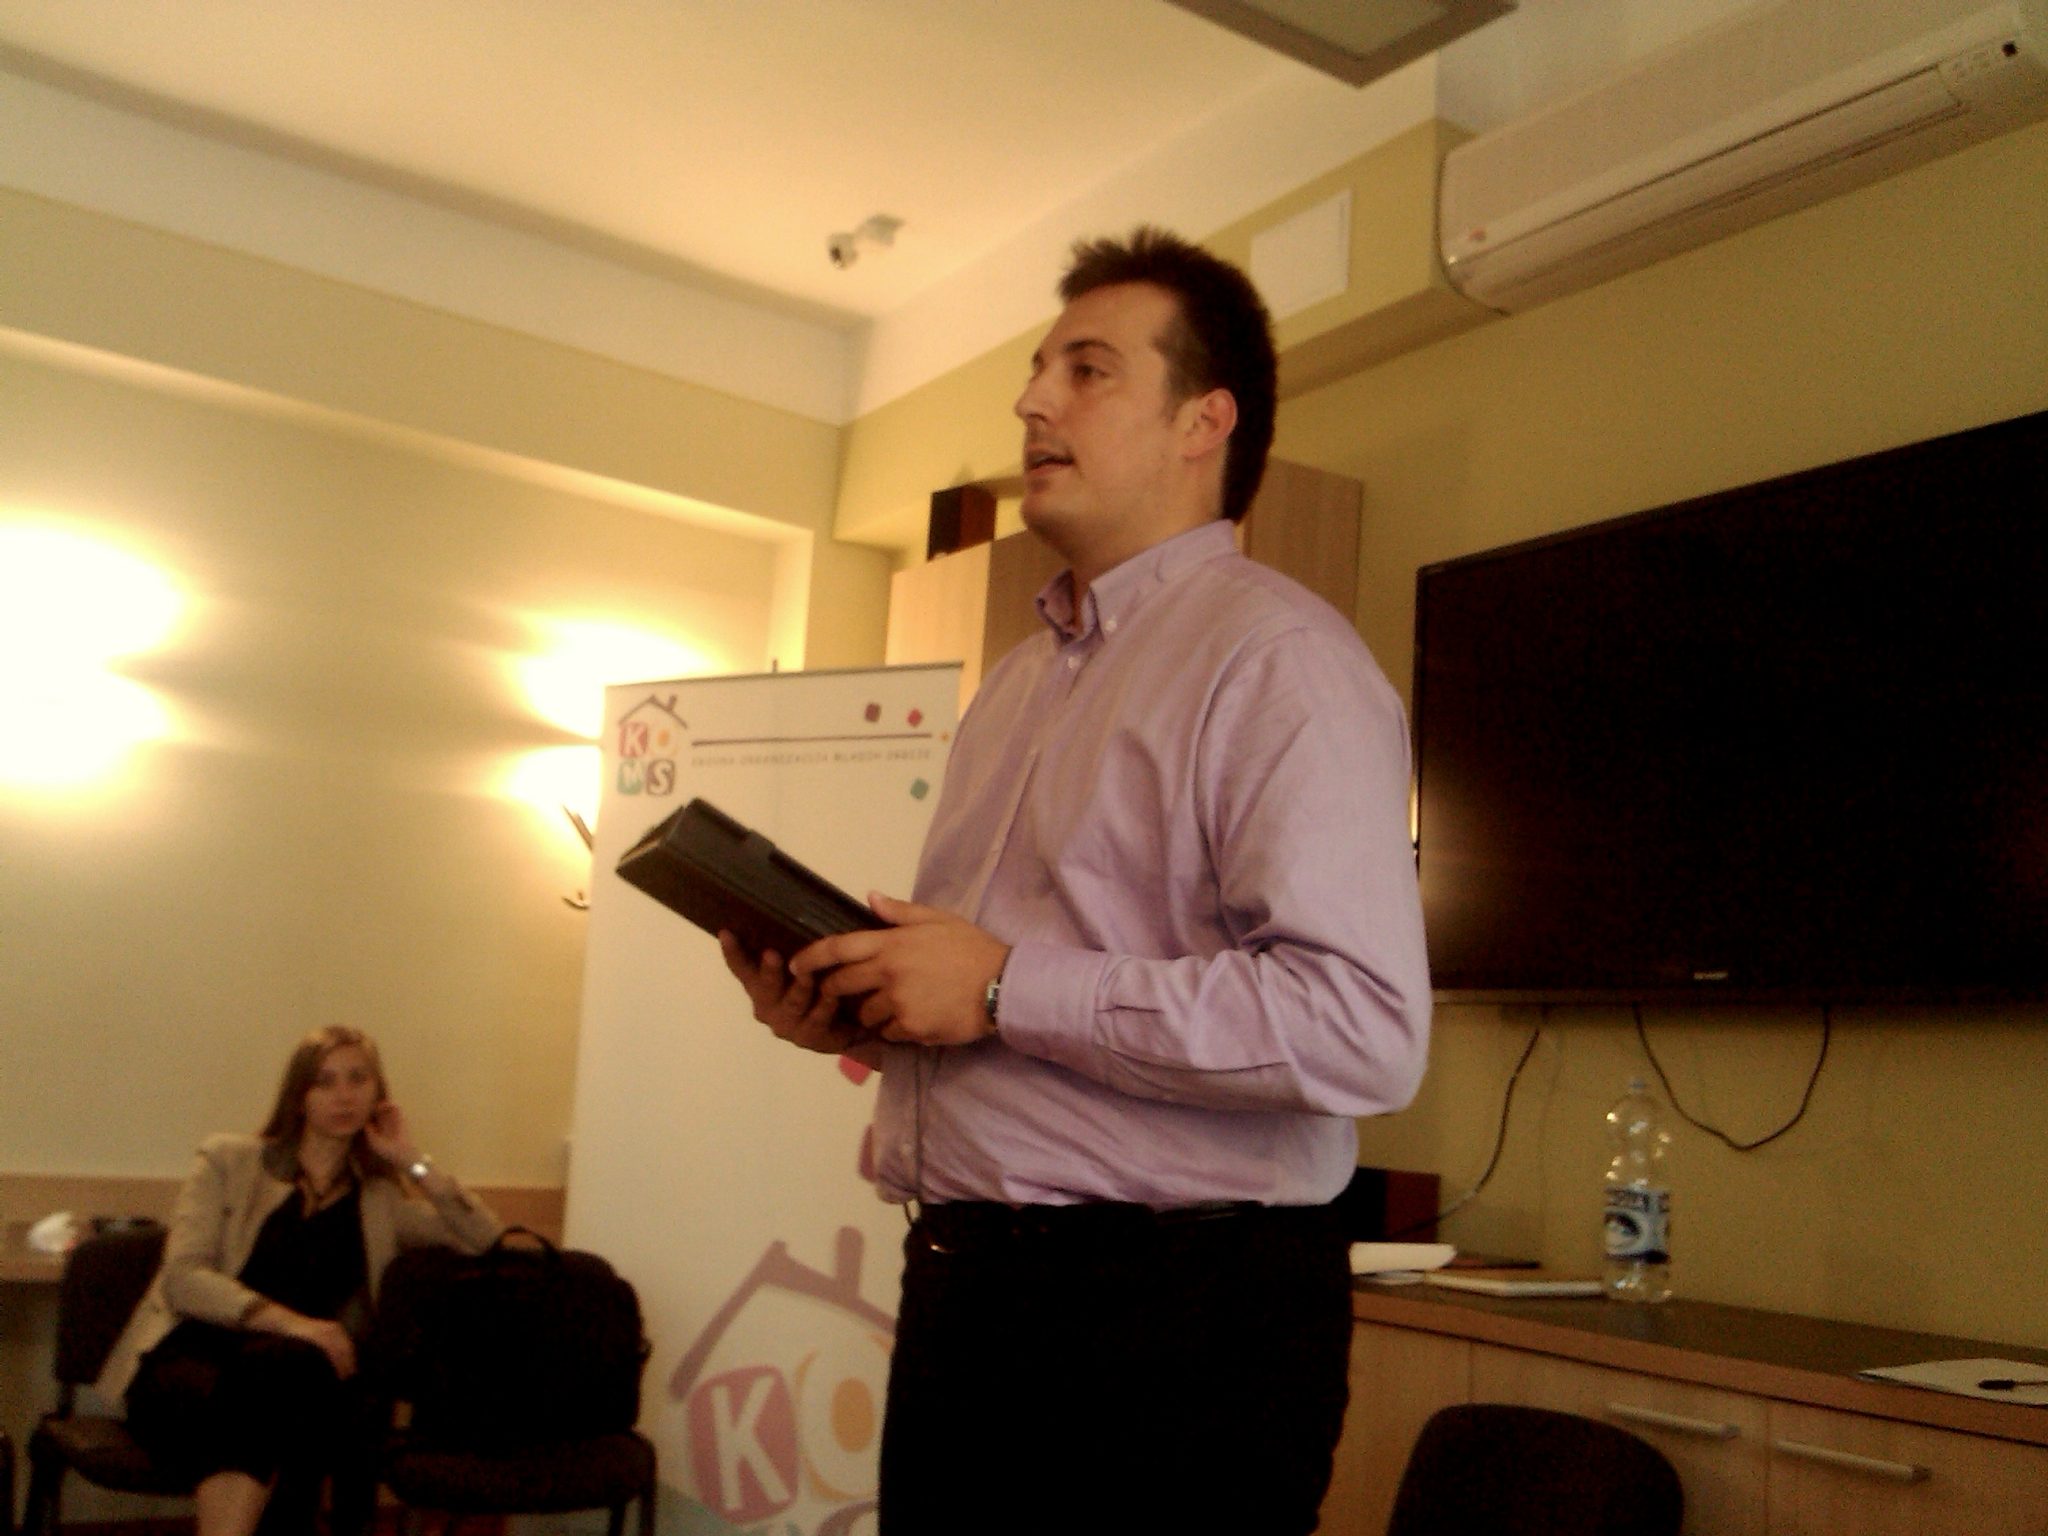 BFPE’s Marko Savkovic spoke on youth participation in public policies